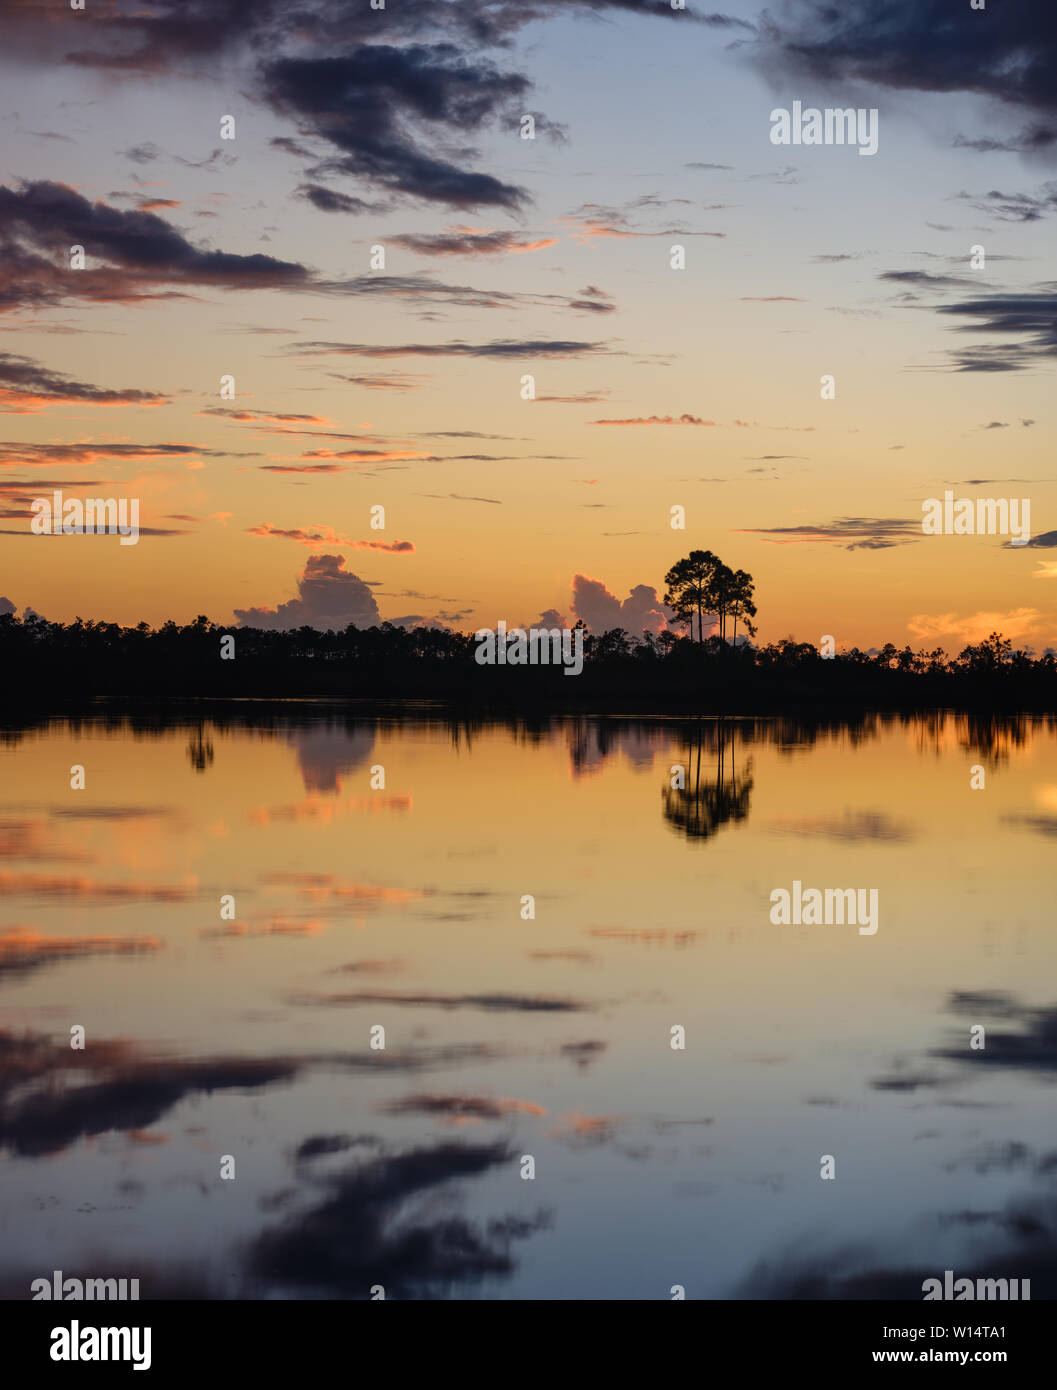 MIAMI, FLORIDA - CIRCA SEPTEMBER 2018:  Sunset over the Florida Everglades near Miami. Stock Photo